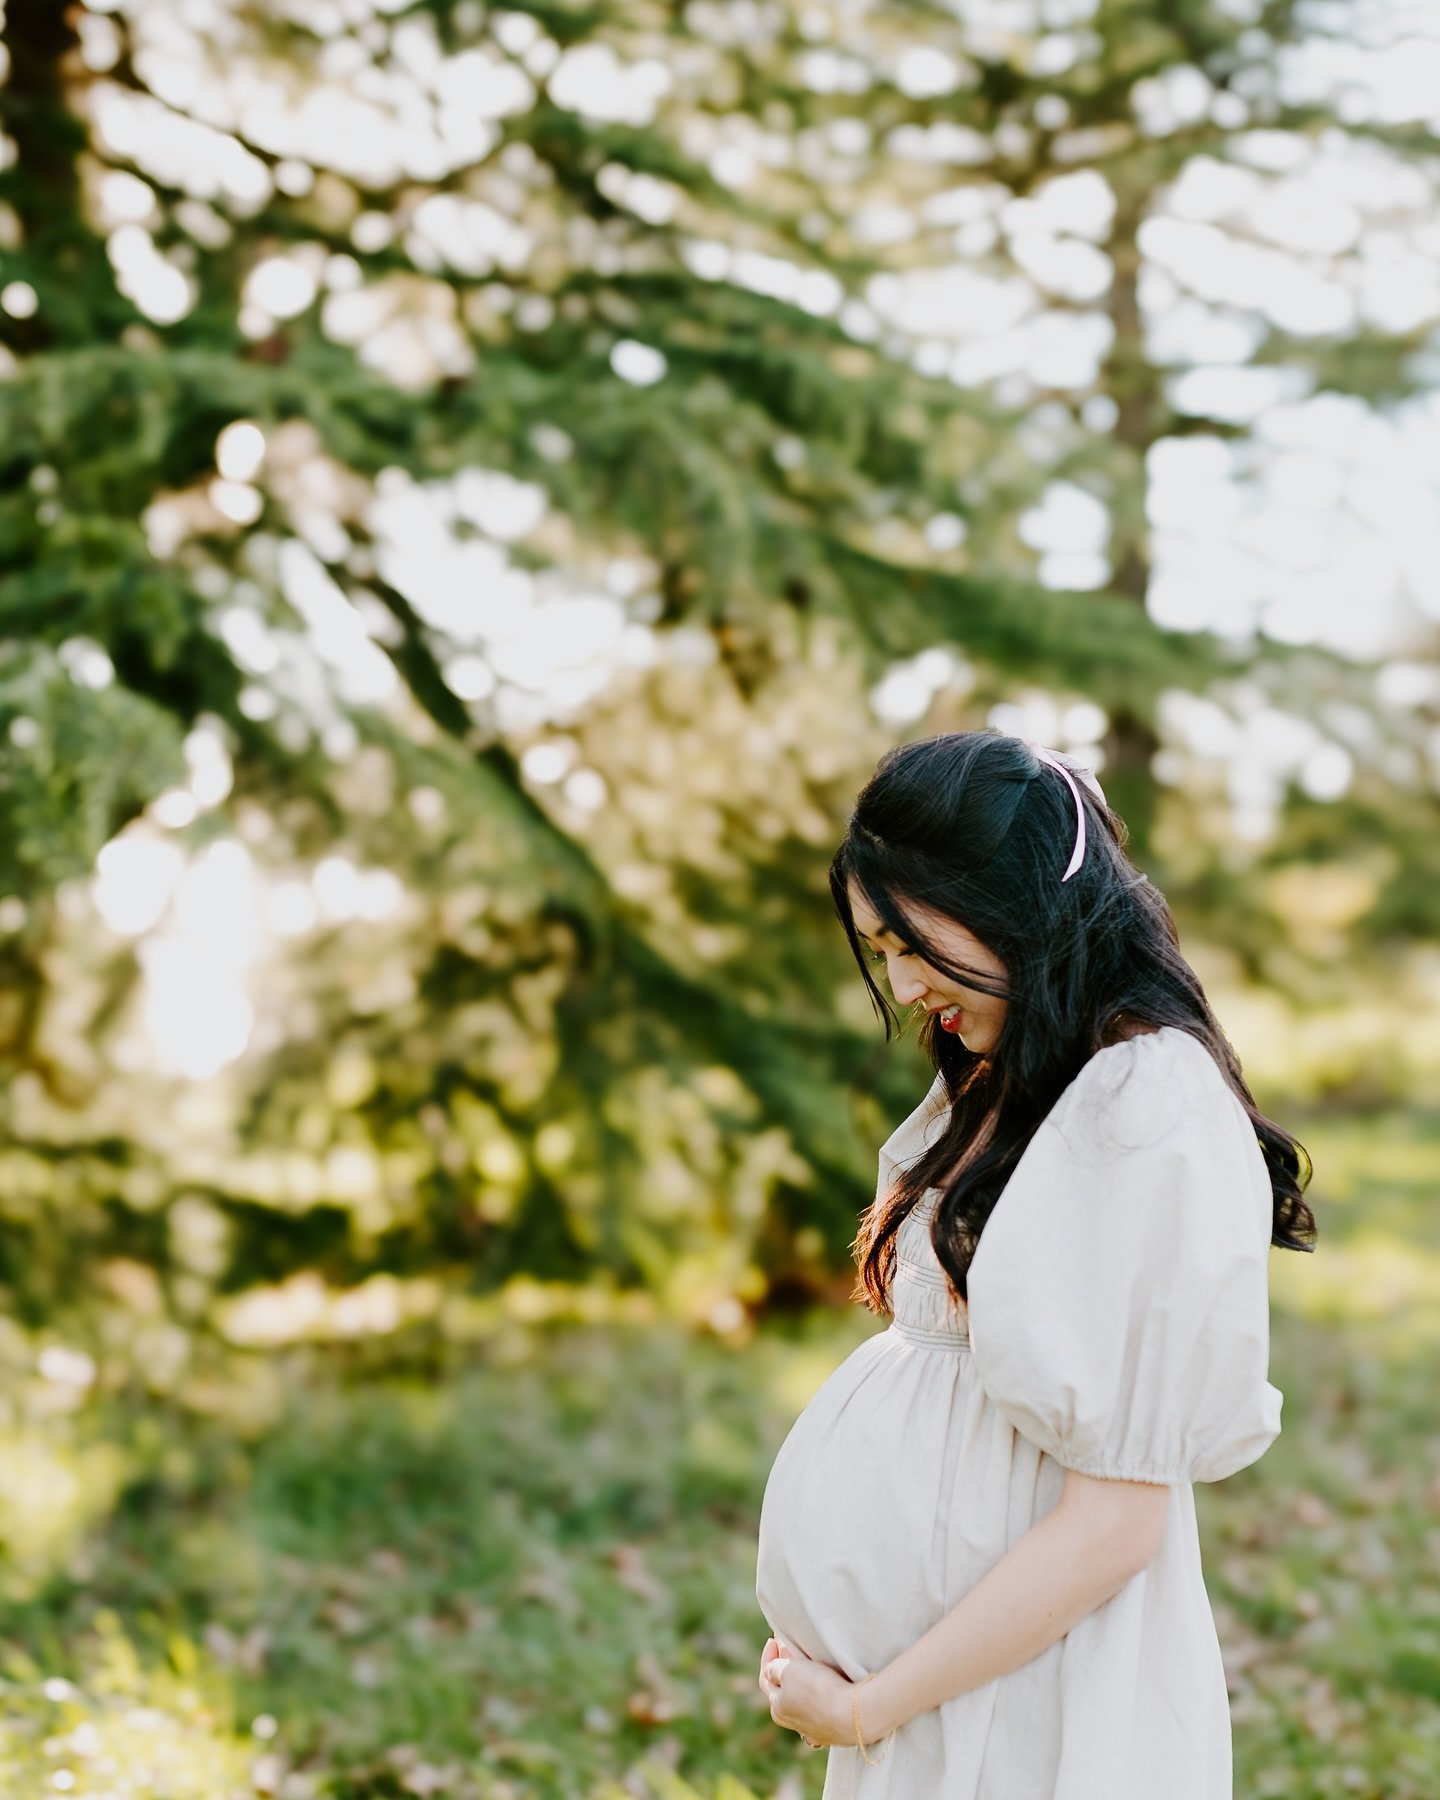 Such a beautiful prego mama 🤍

#maternityphotography 
#seattlefamilyphotographer